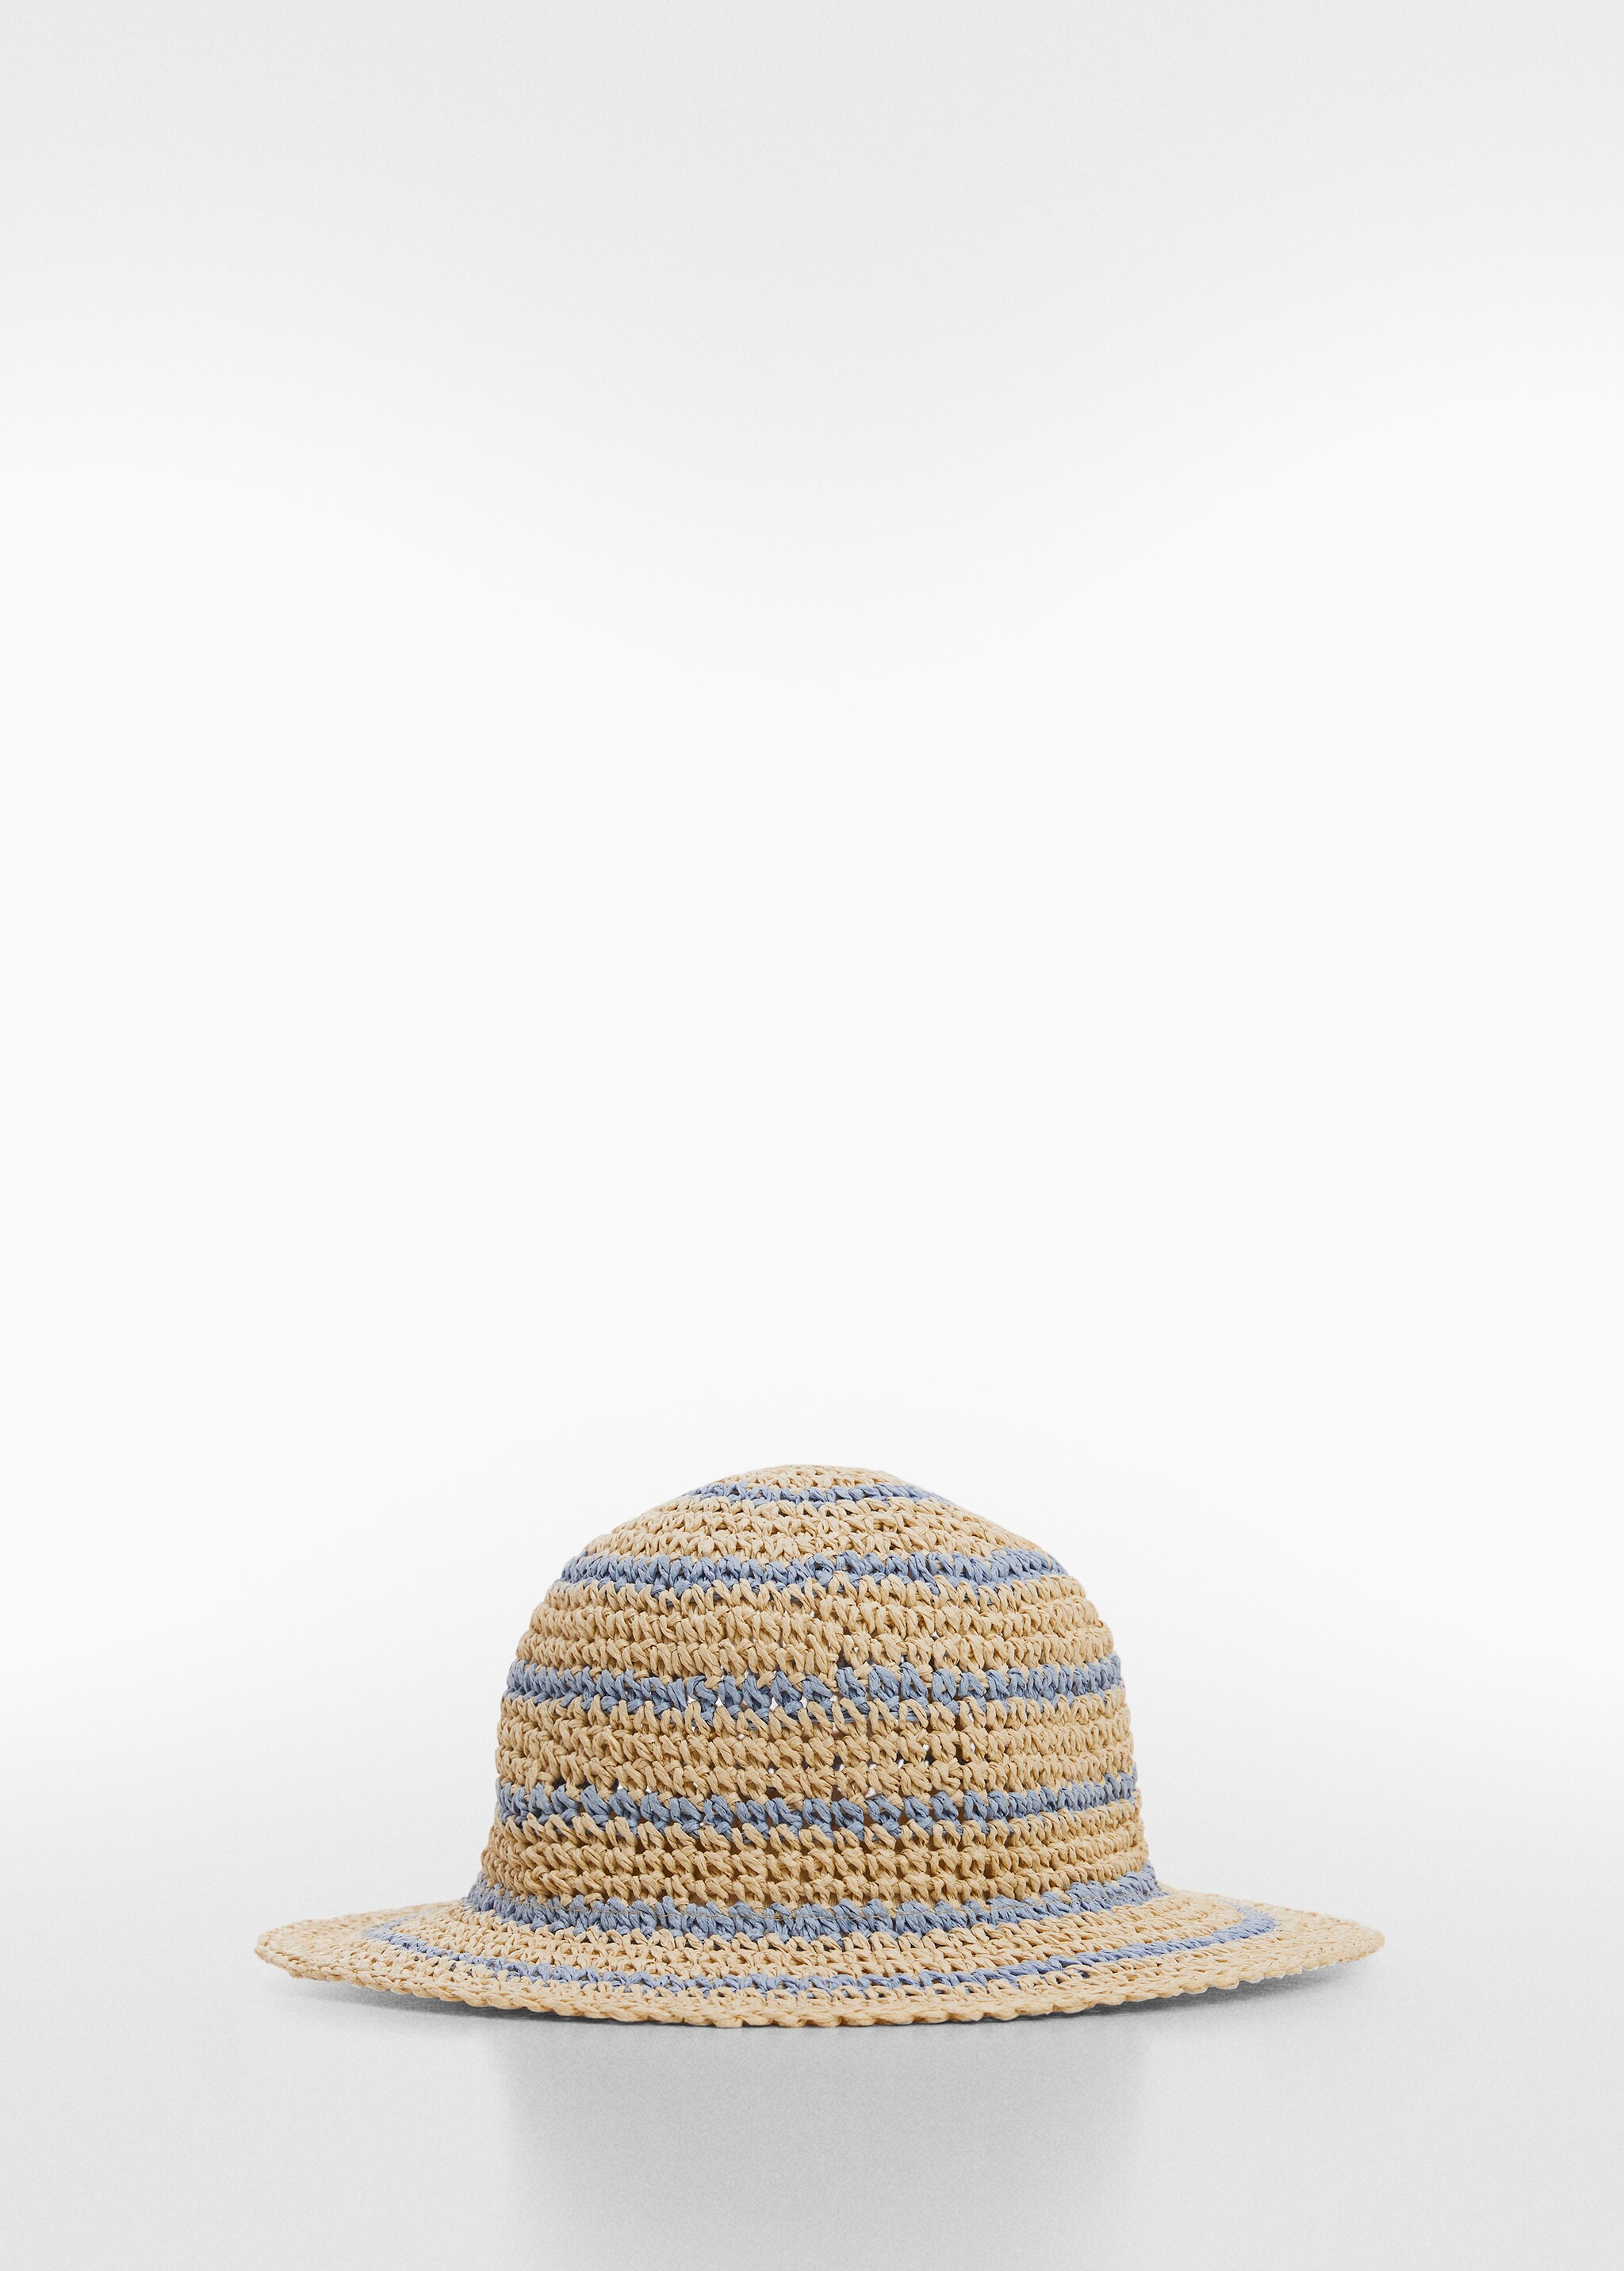 Шляпа федора из соломки - Изделие без модели